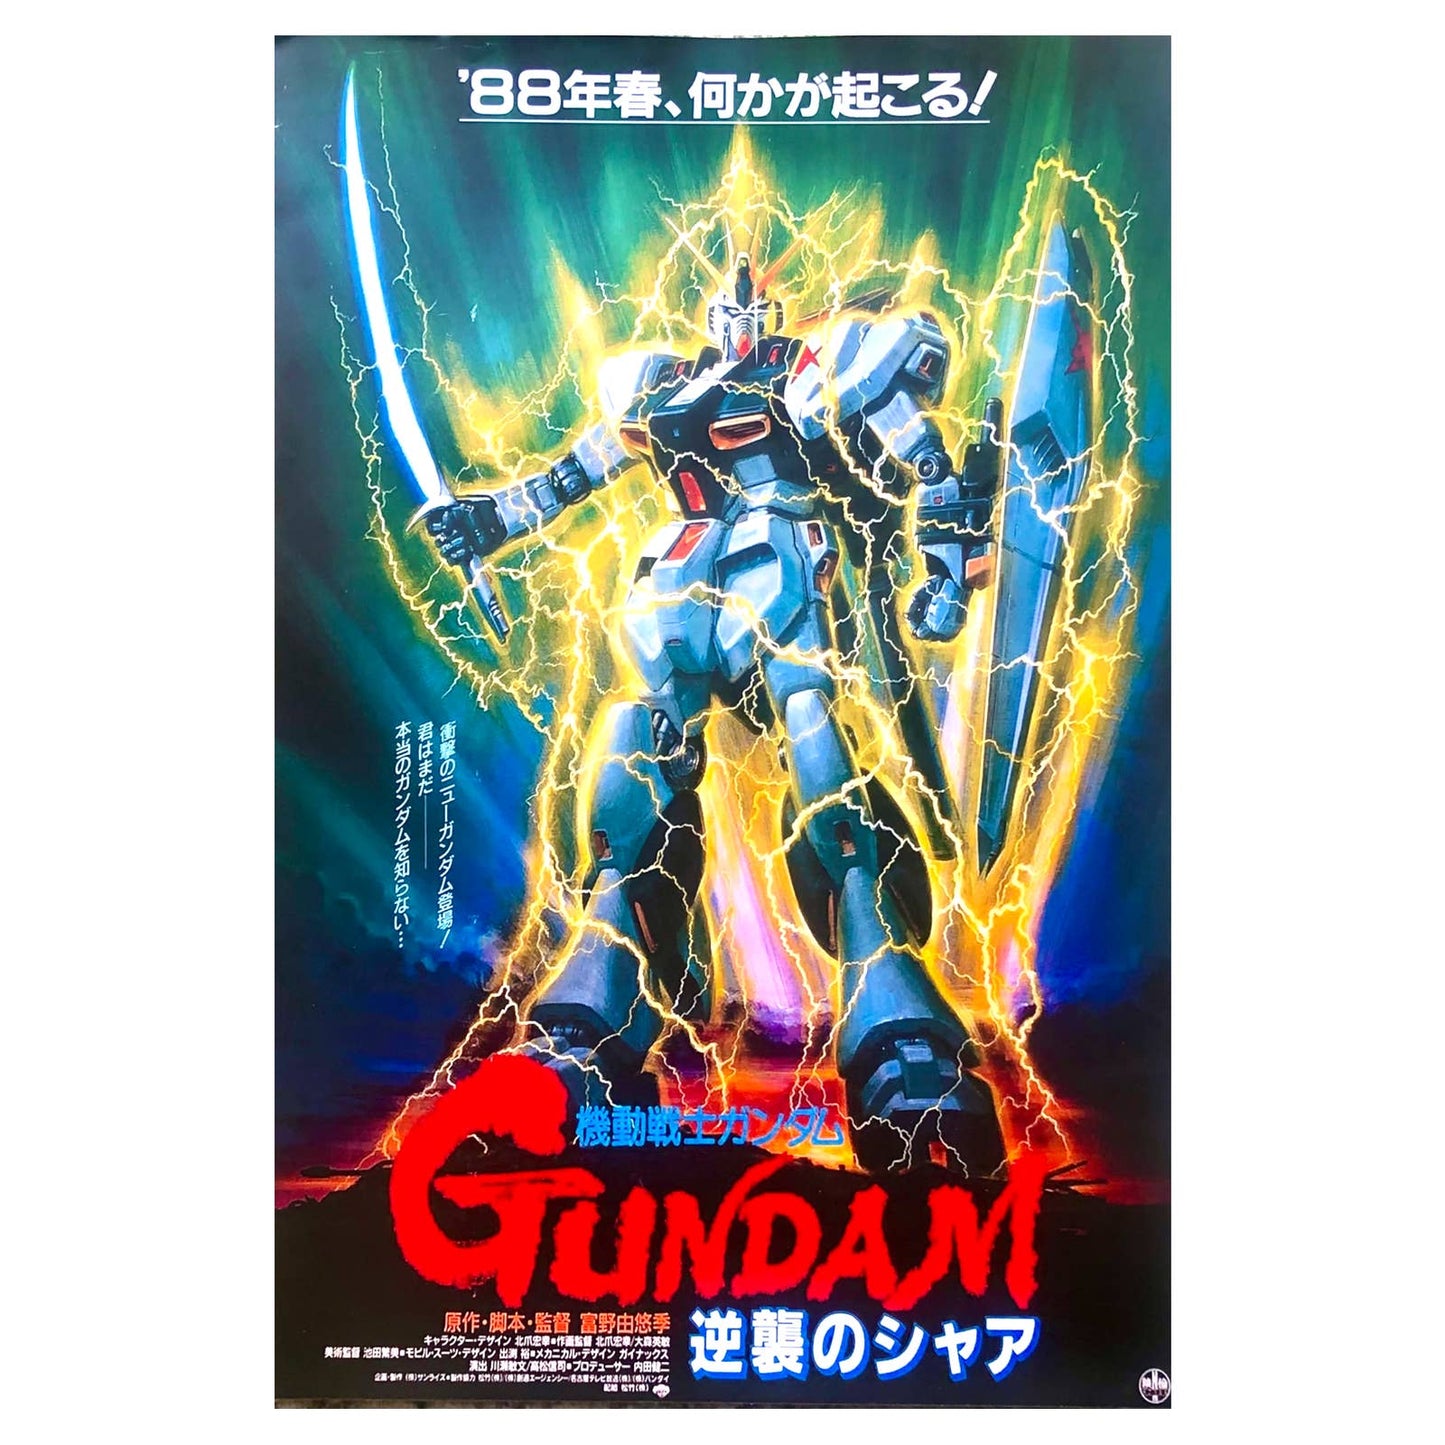 Mobile Suit Gundam Poster Print Wall Art 16"x24"